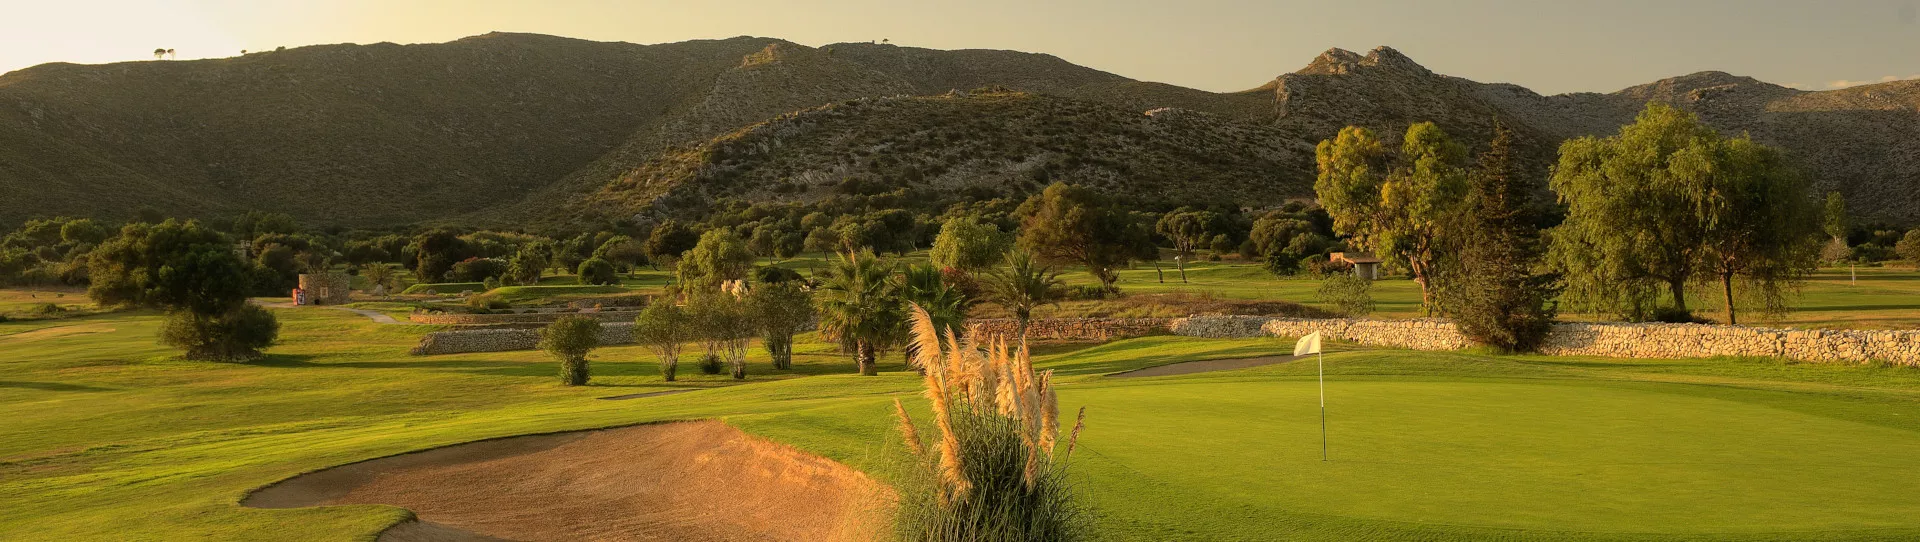 Spain golf courses - Capdepera Golf Course - Photo 1